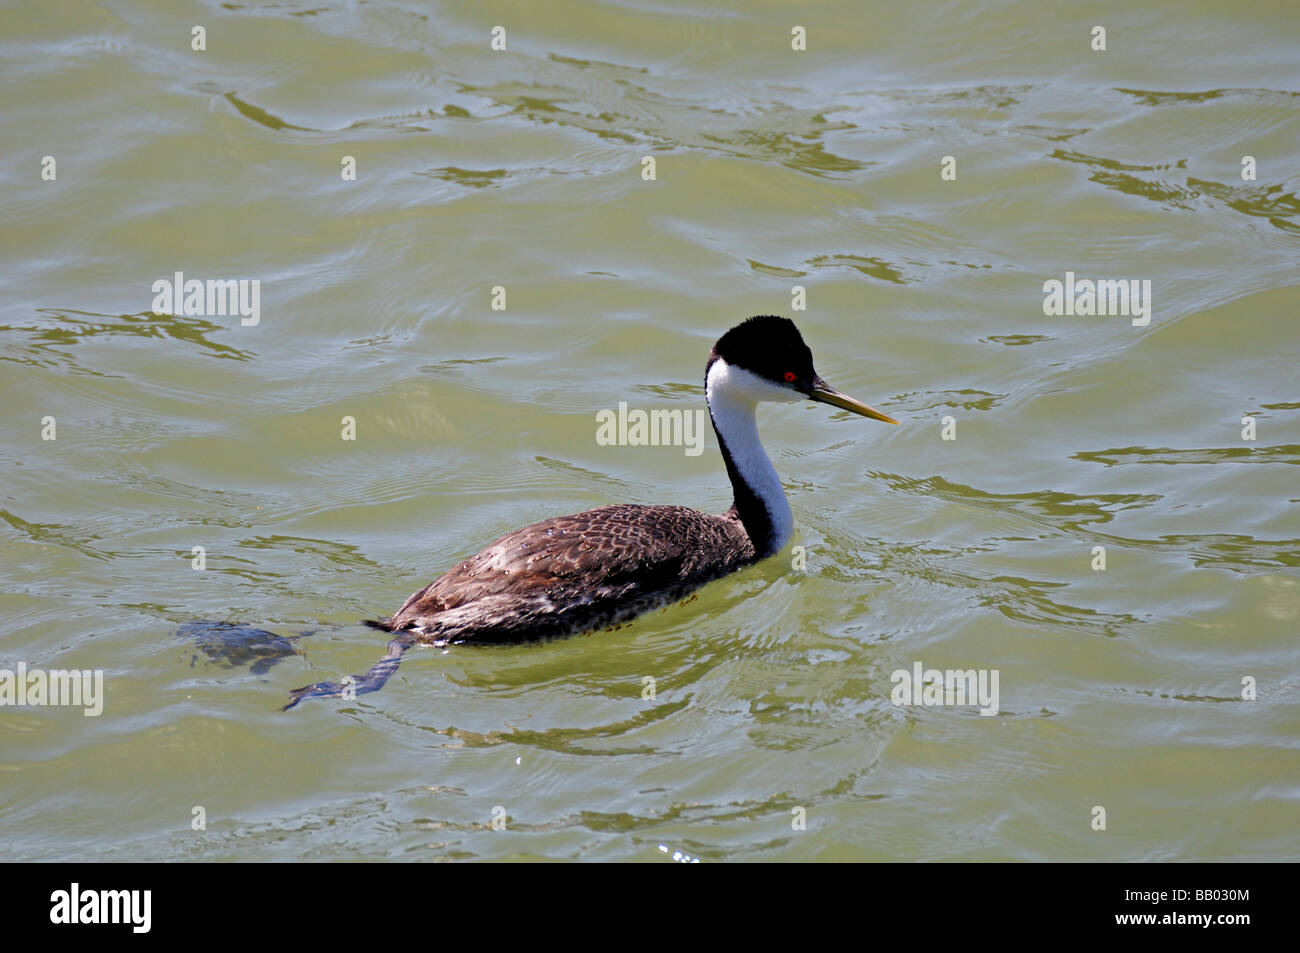 A Western Grebe bird  (Aechmophorus occidentalis)  seen here on the water Stock Photo